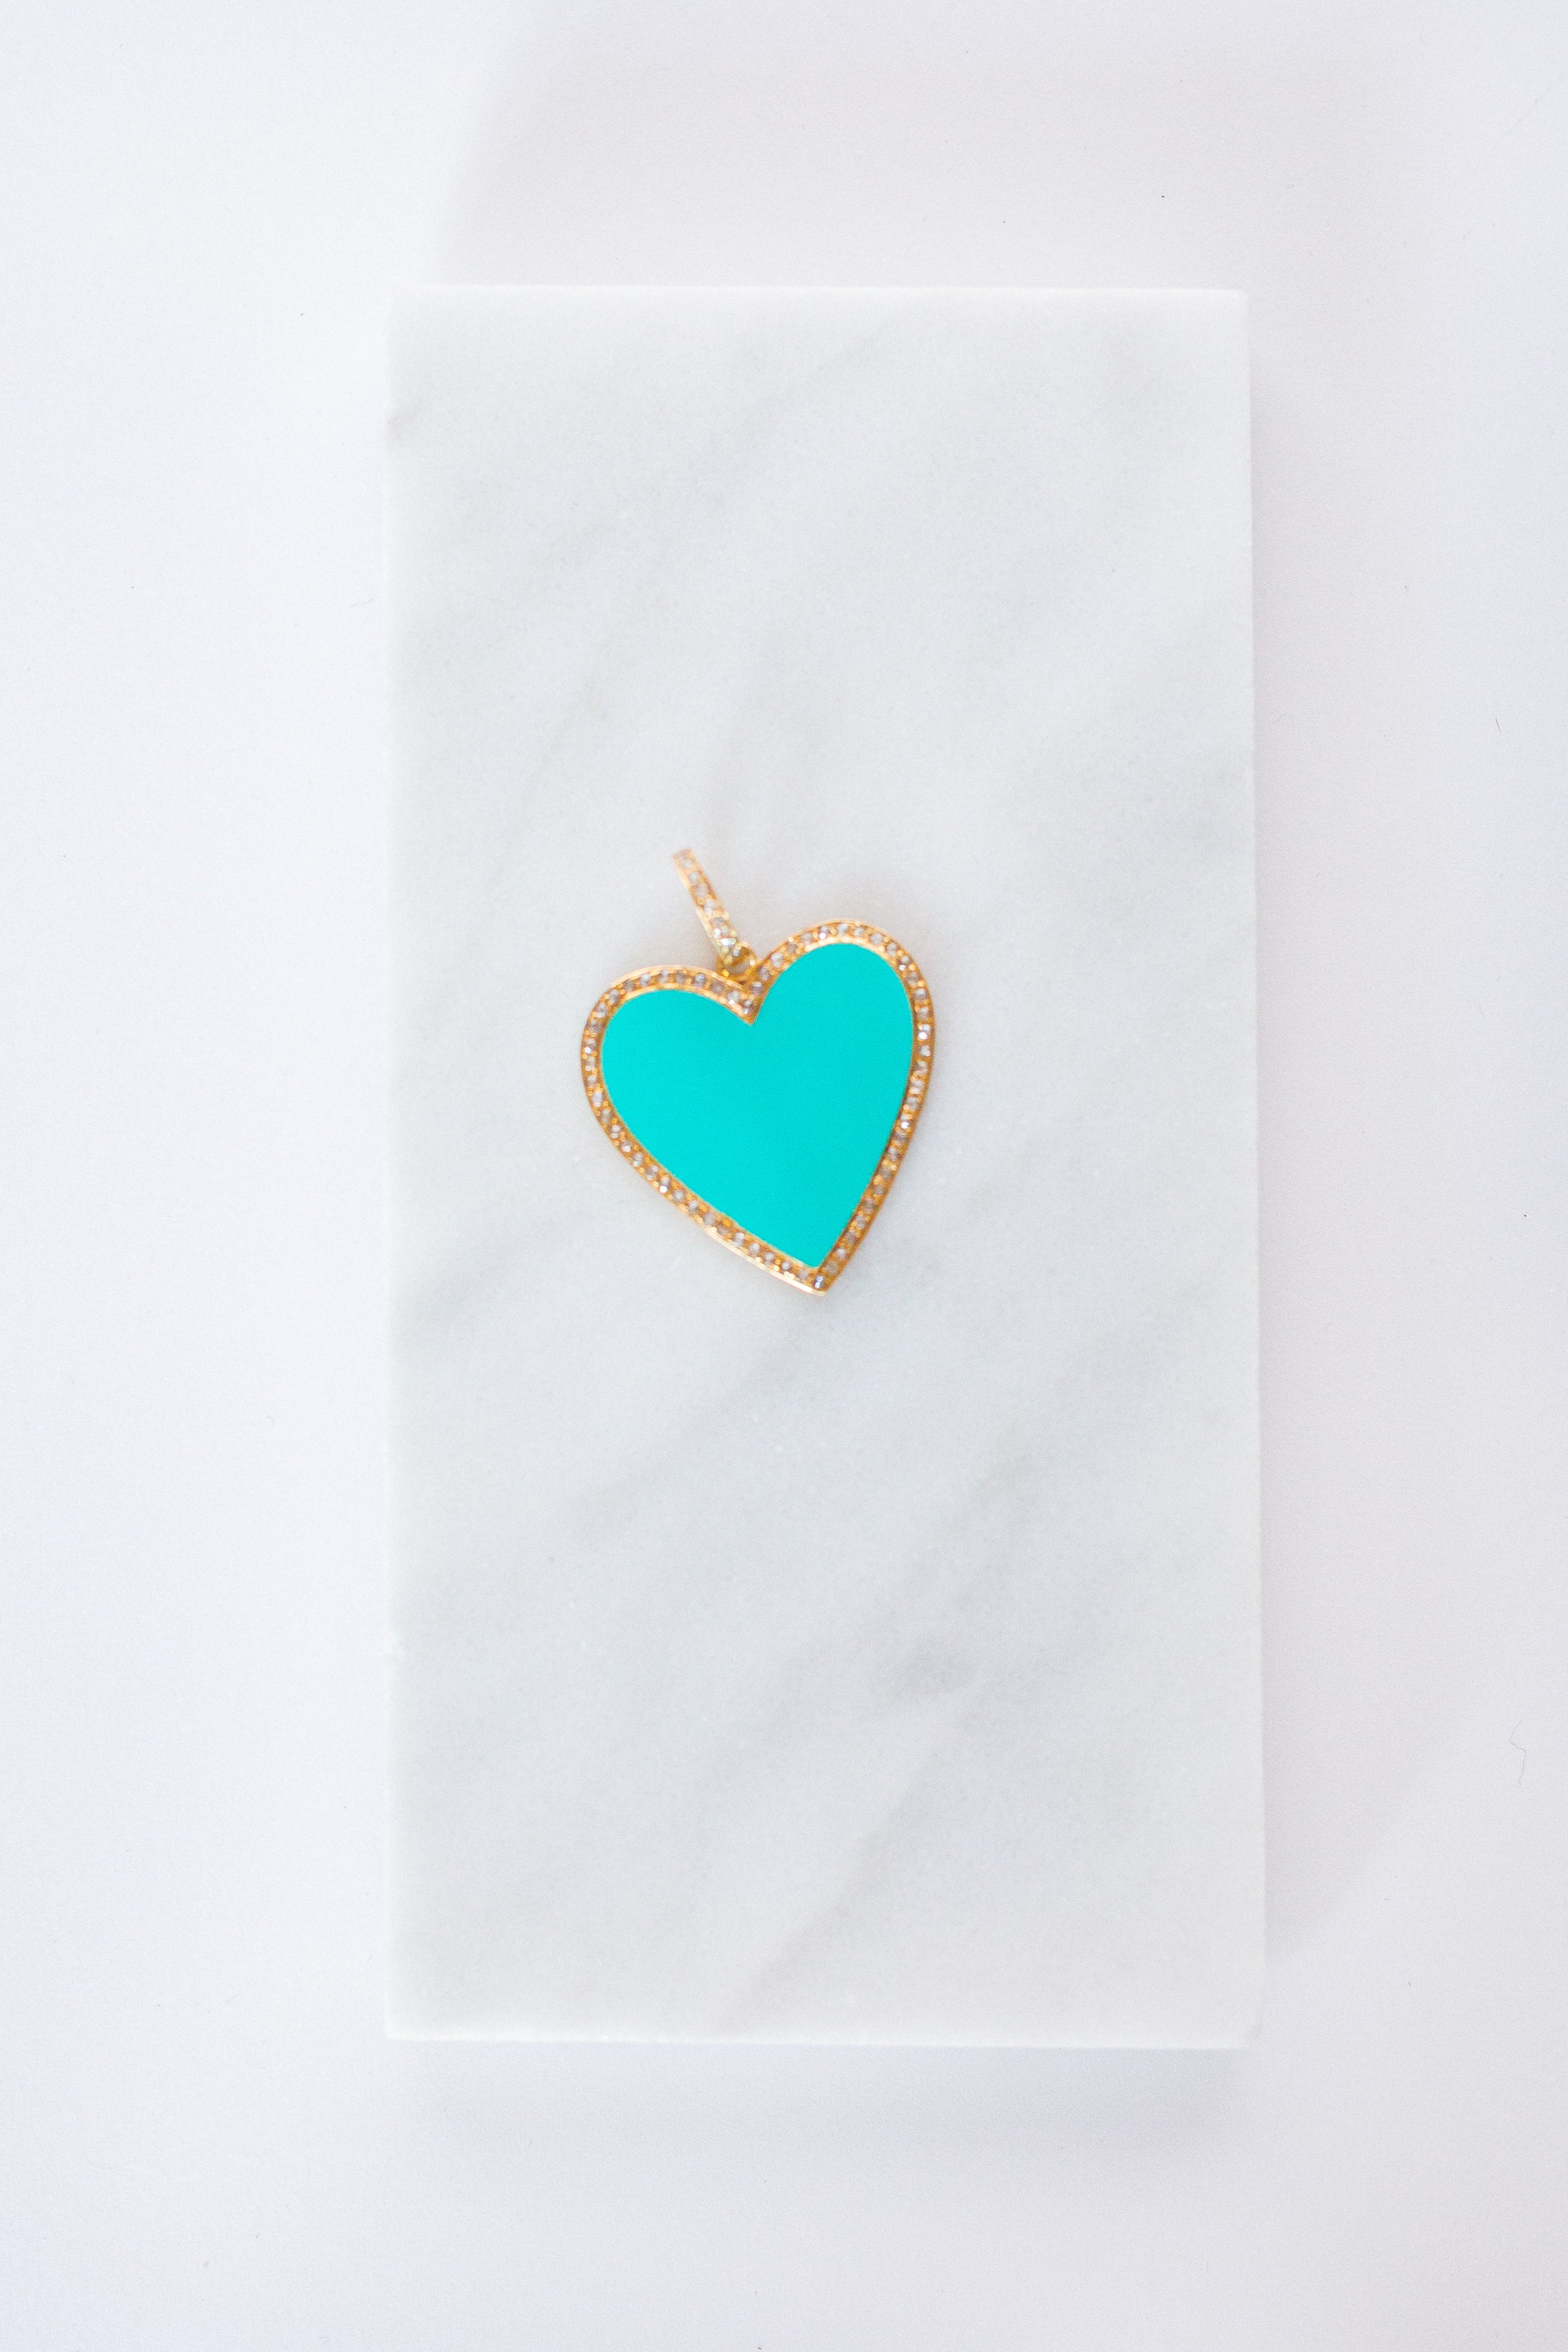 C118 - medium heart turquoise/brass